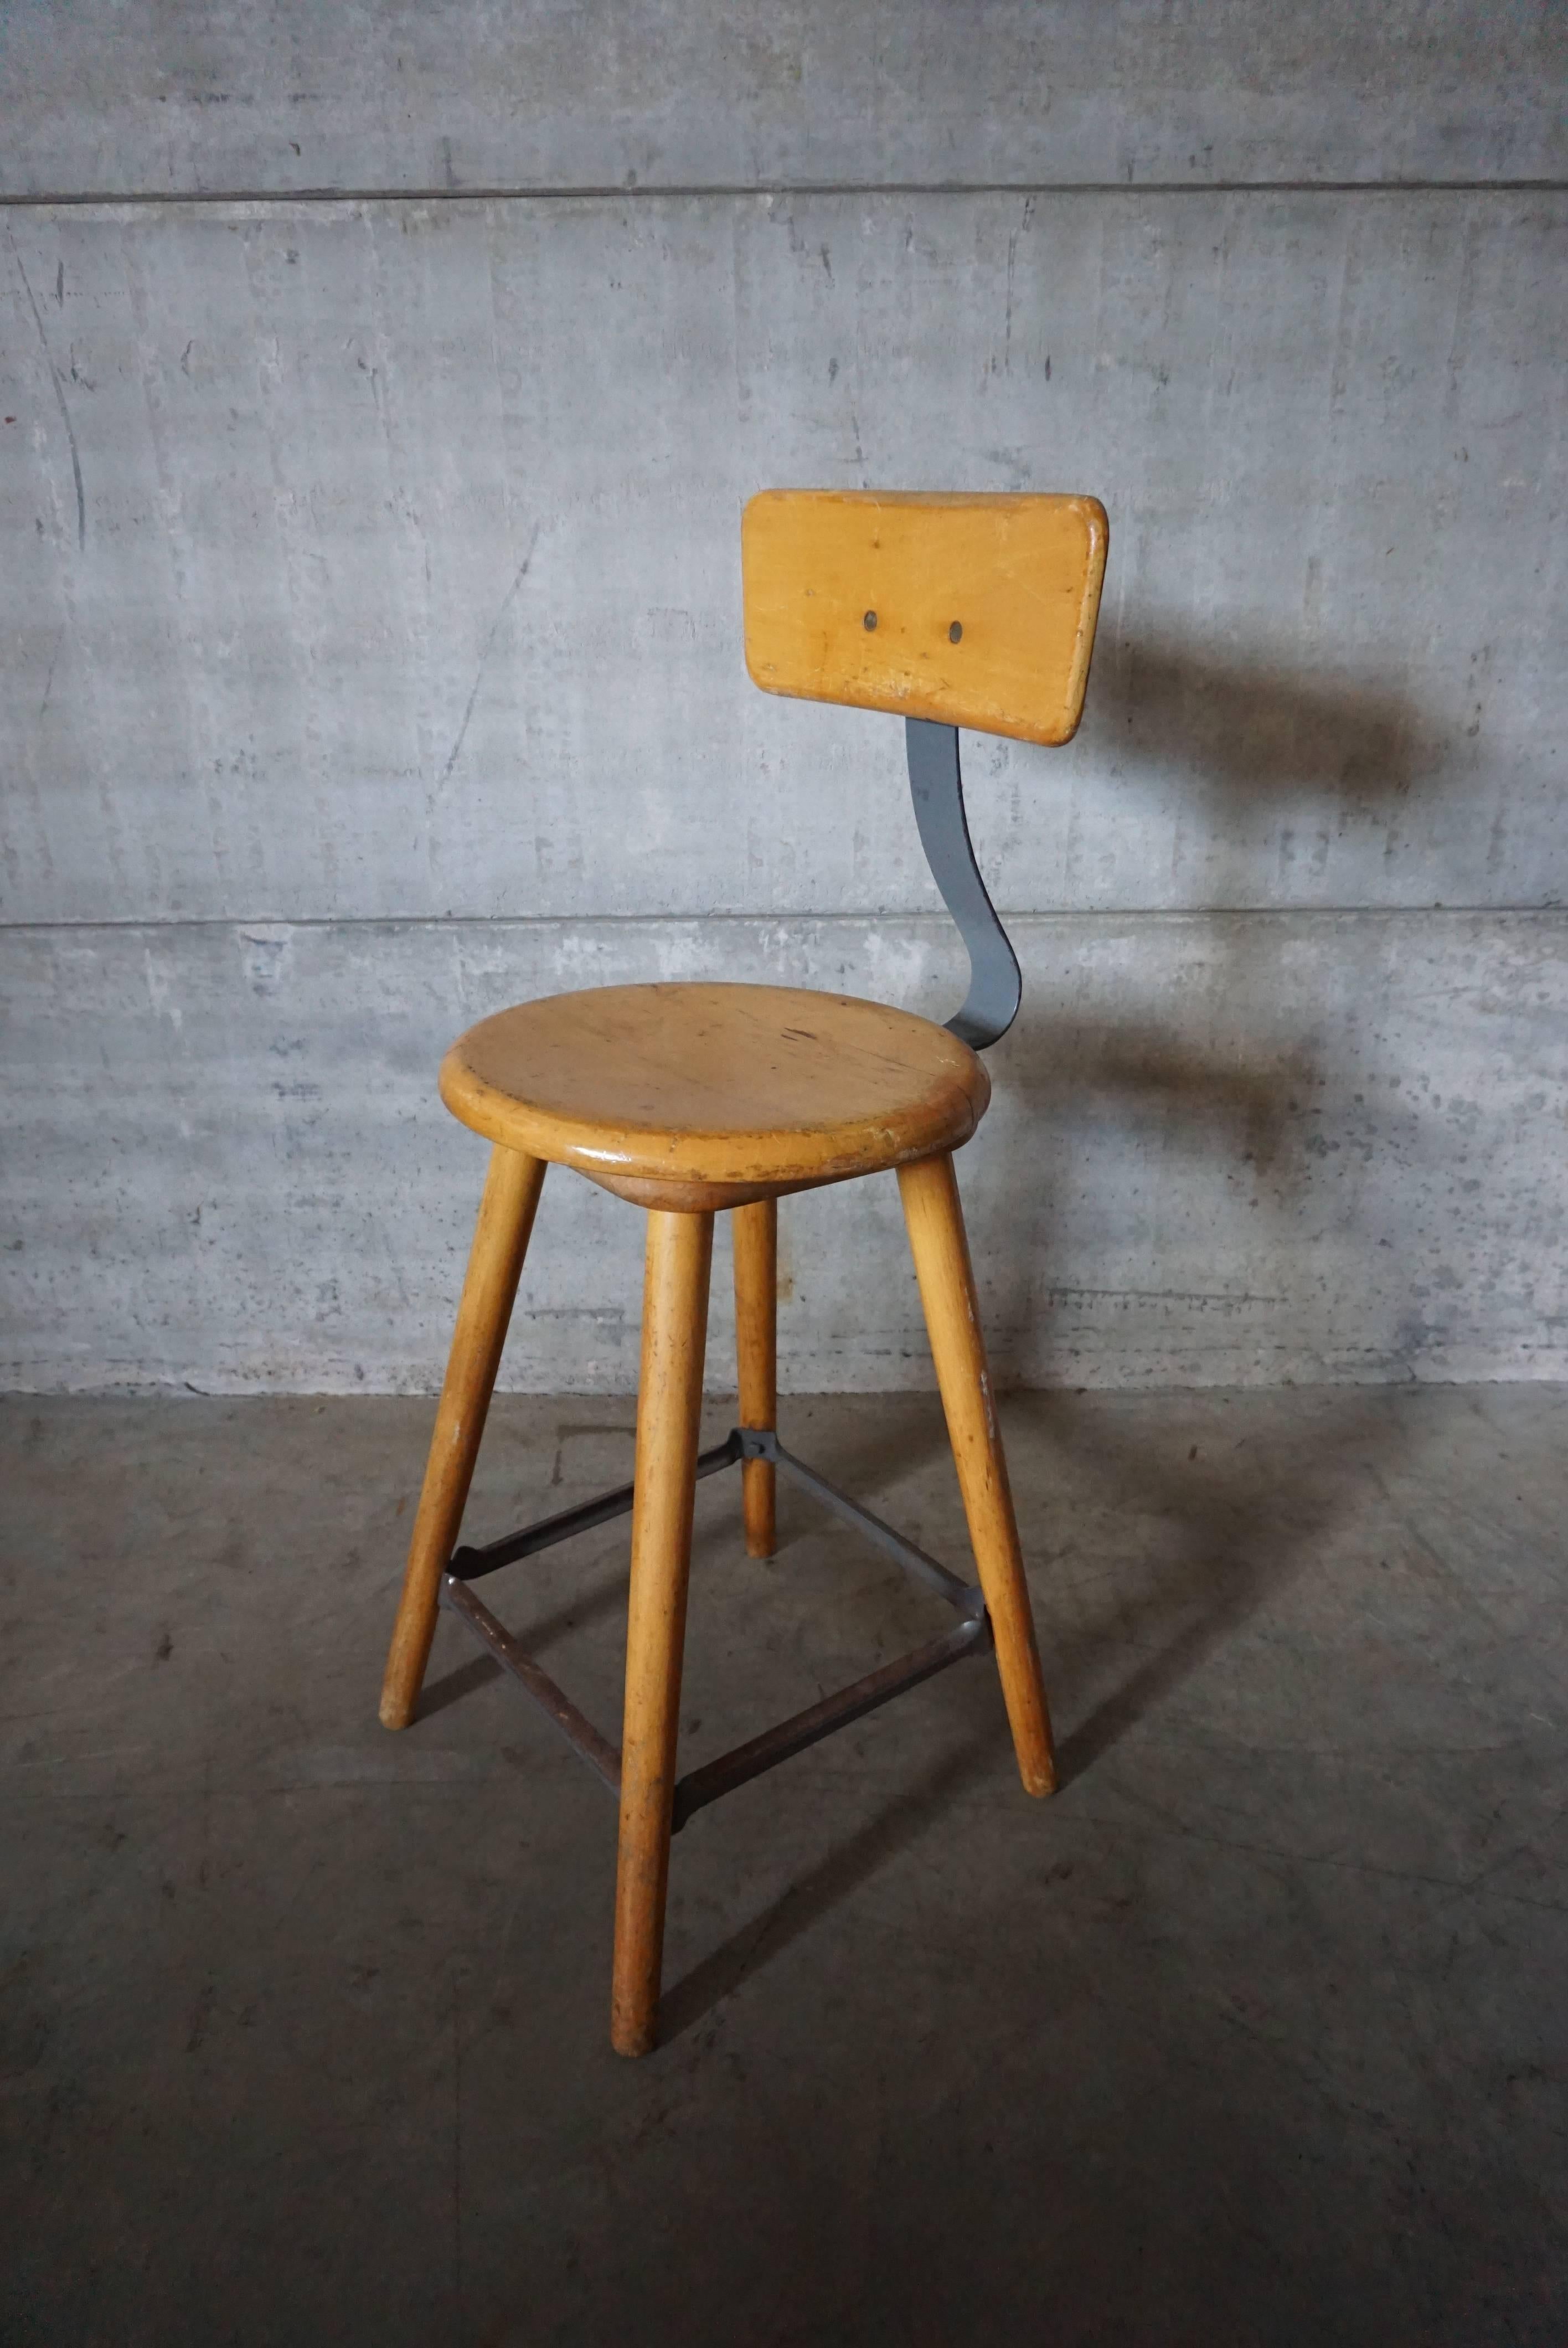 workshop stool